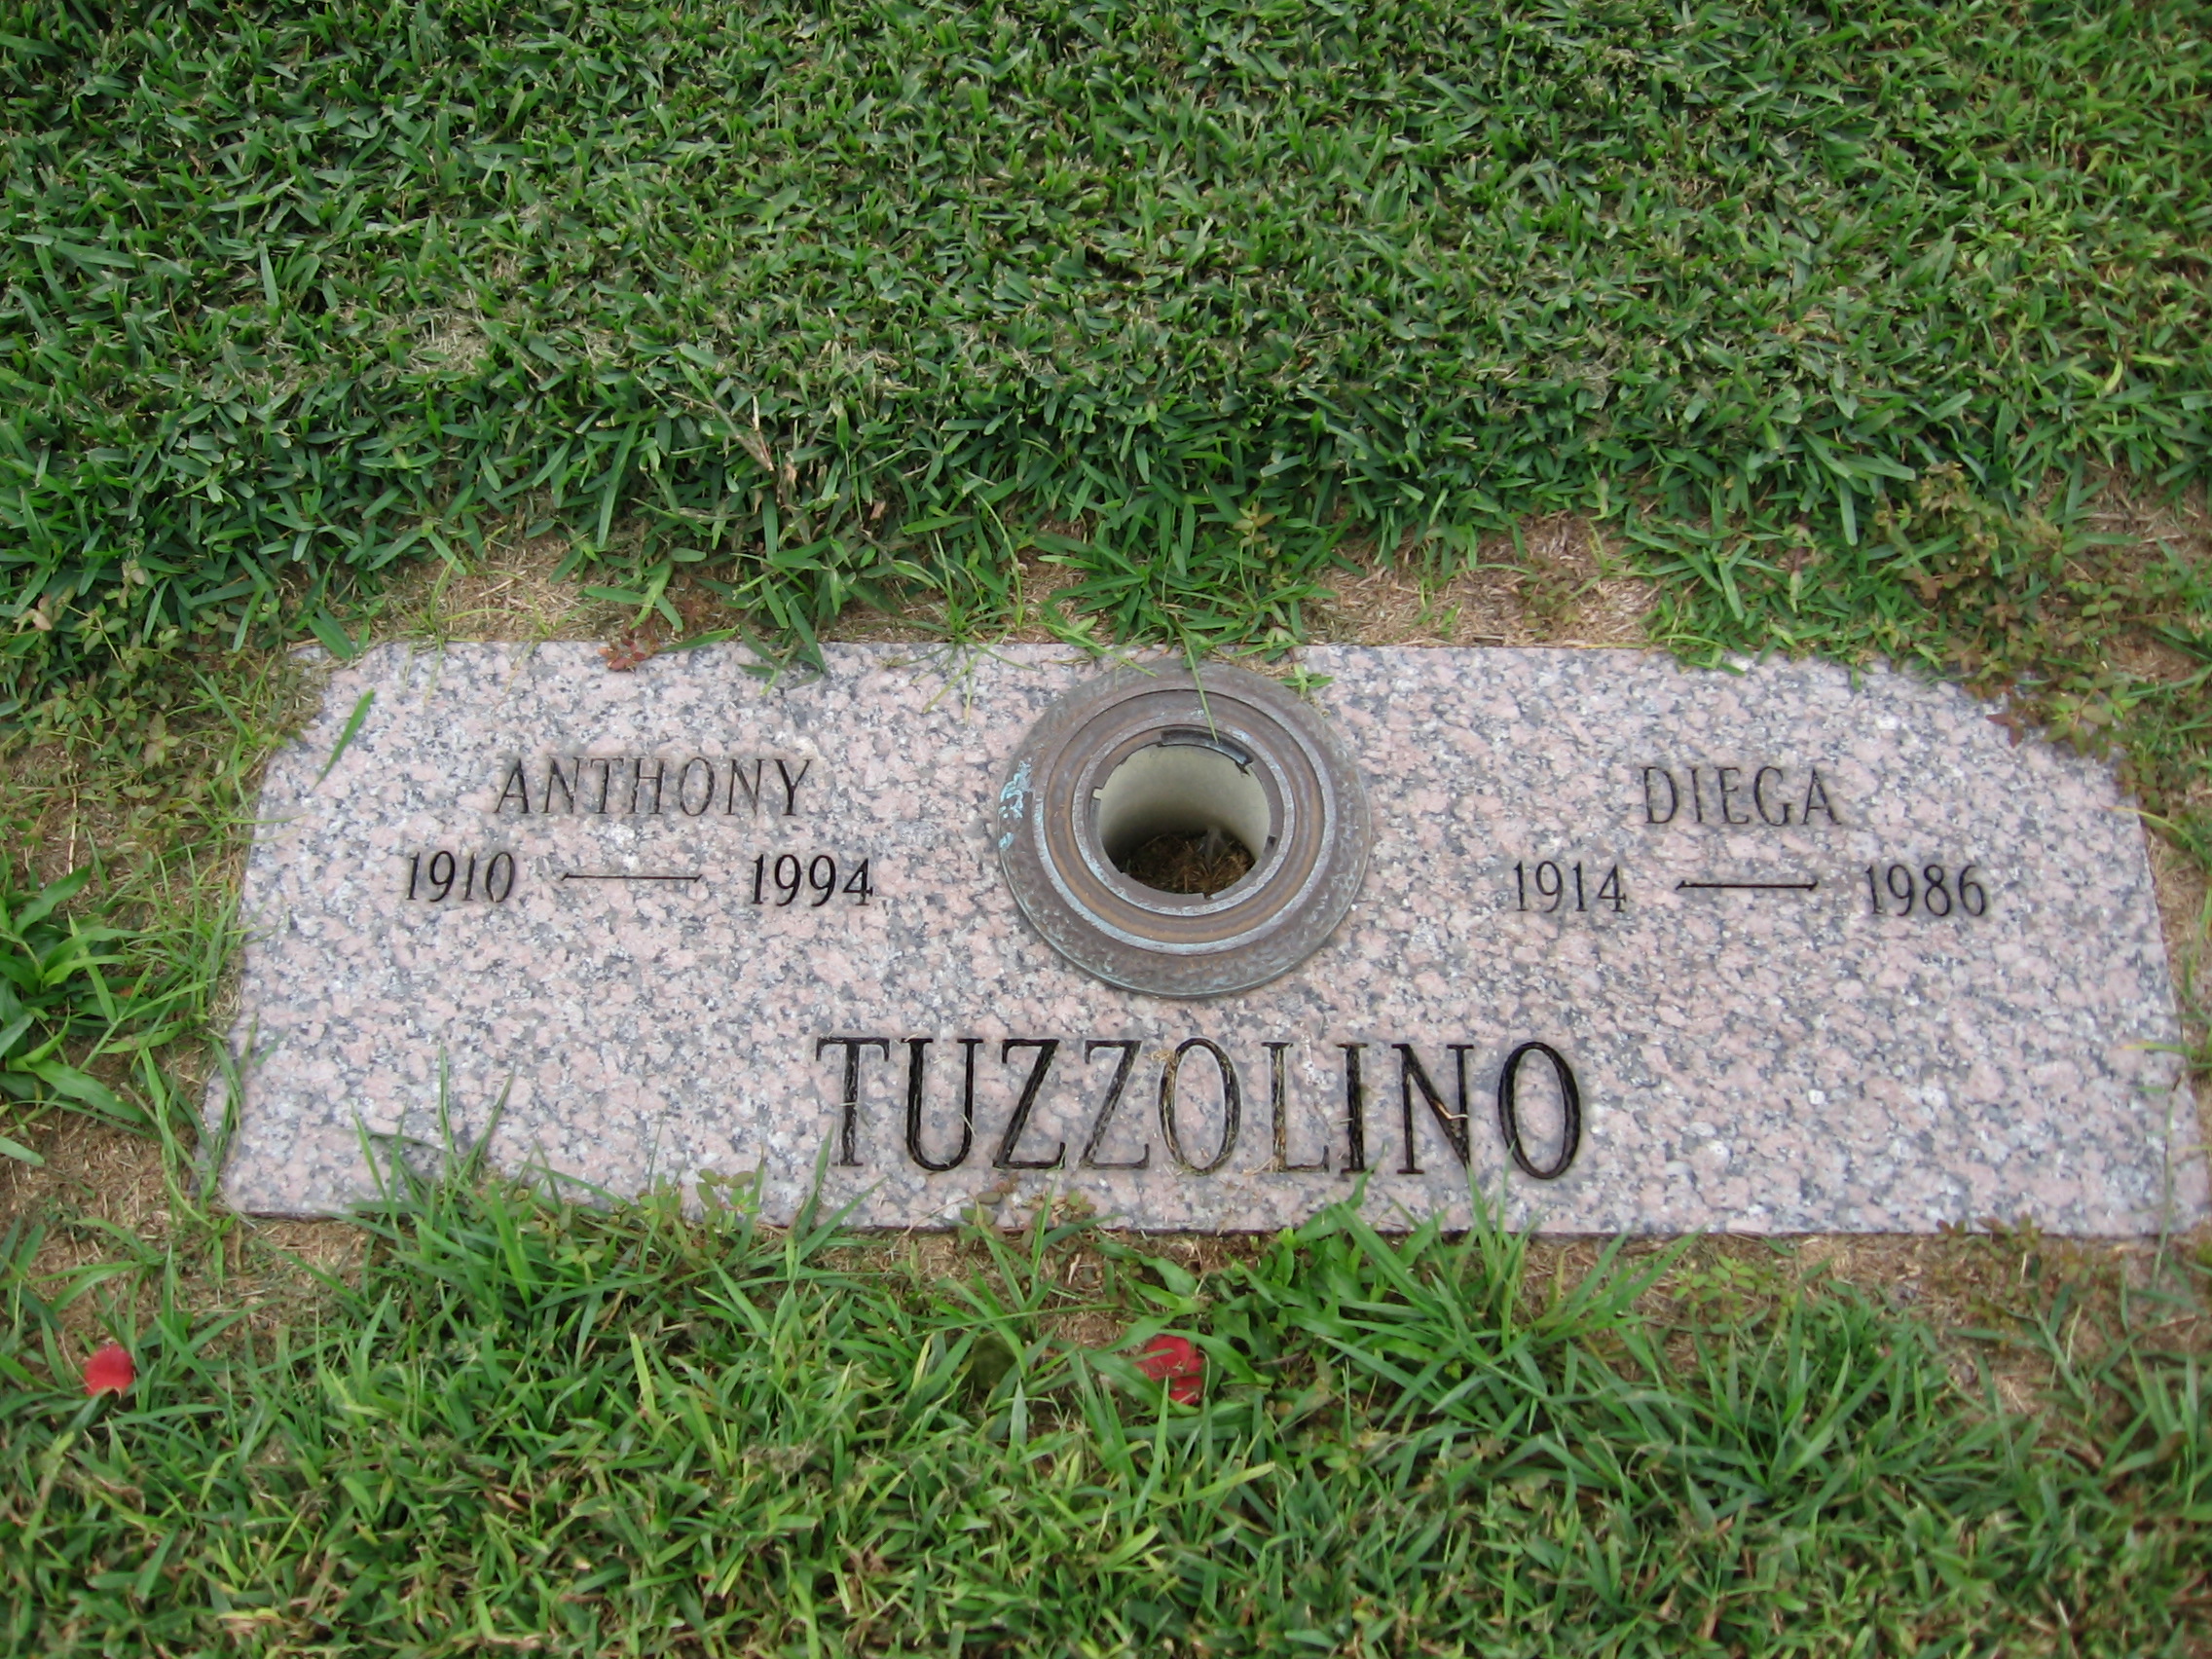 Anthony Tuzzolino